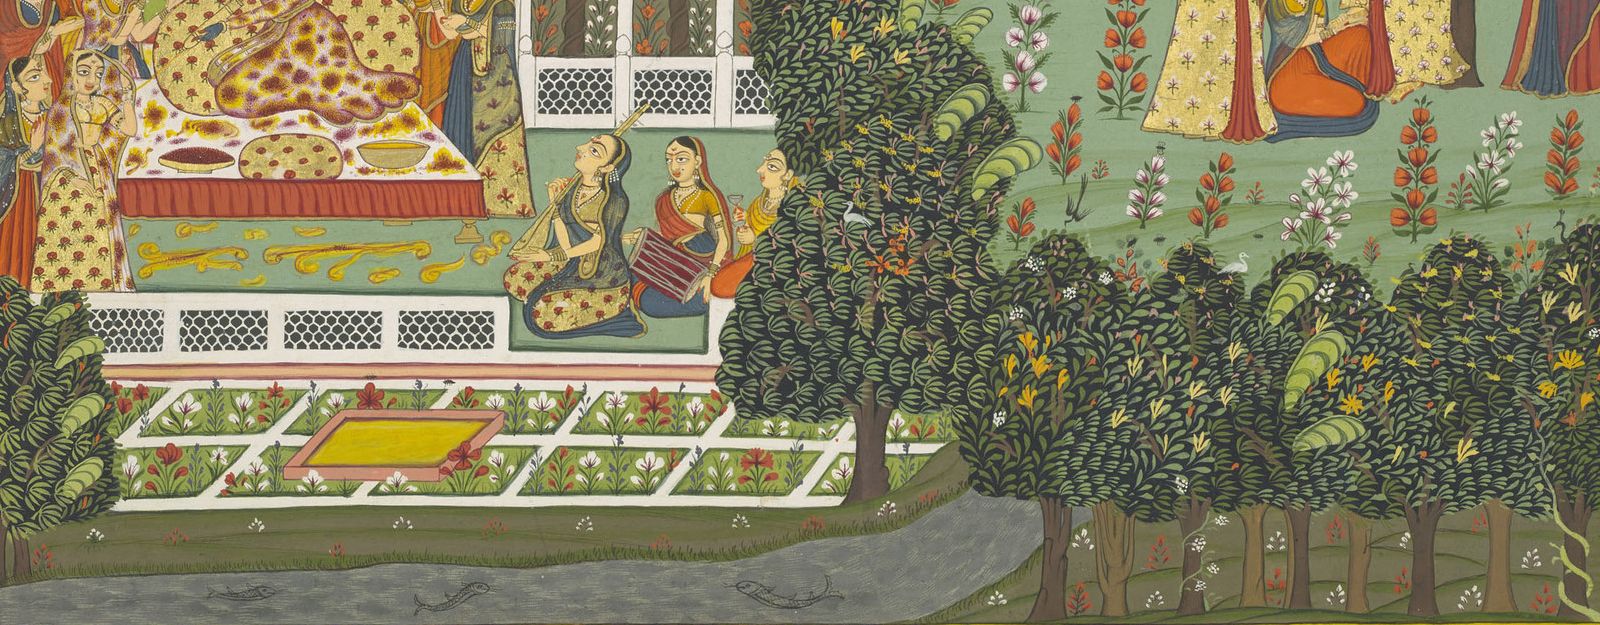 musicians in a garden